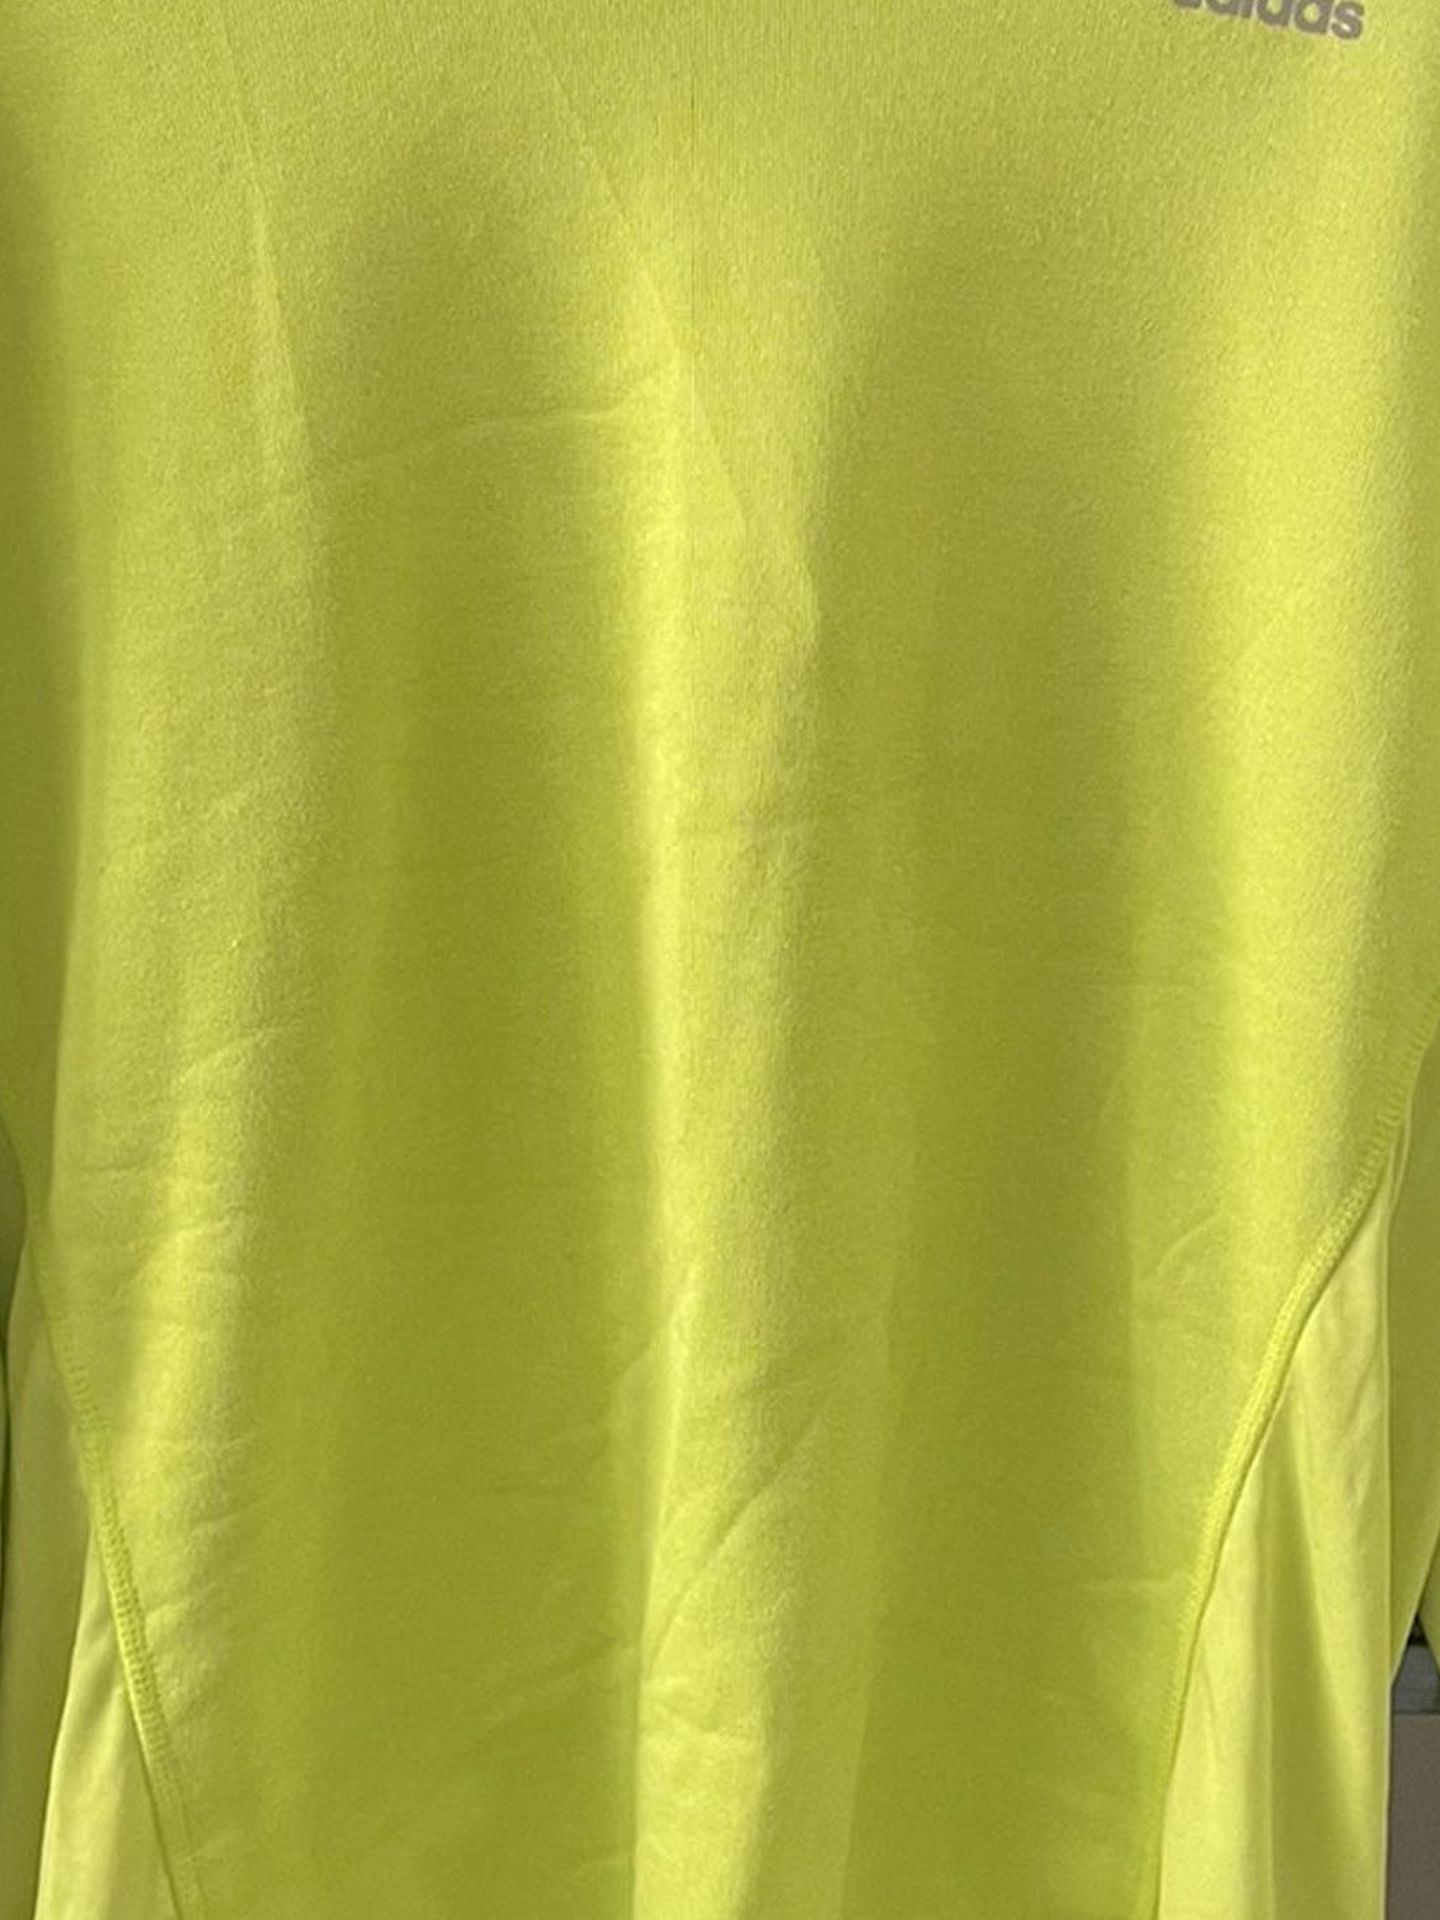 Adidas Neon Yellow/Green Light Weight Sweatshirt Hoodie NWOT